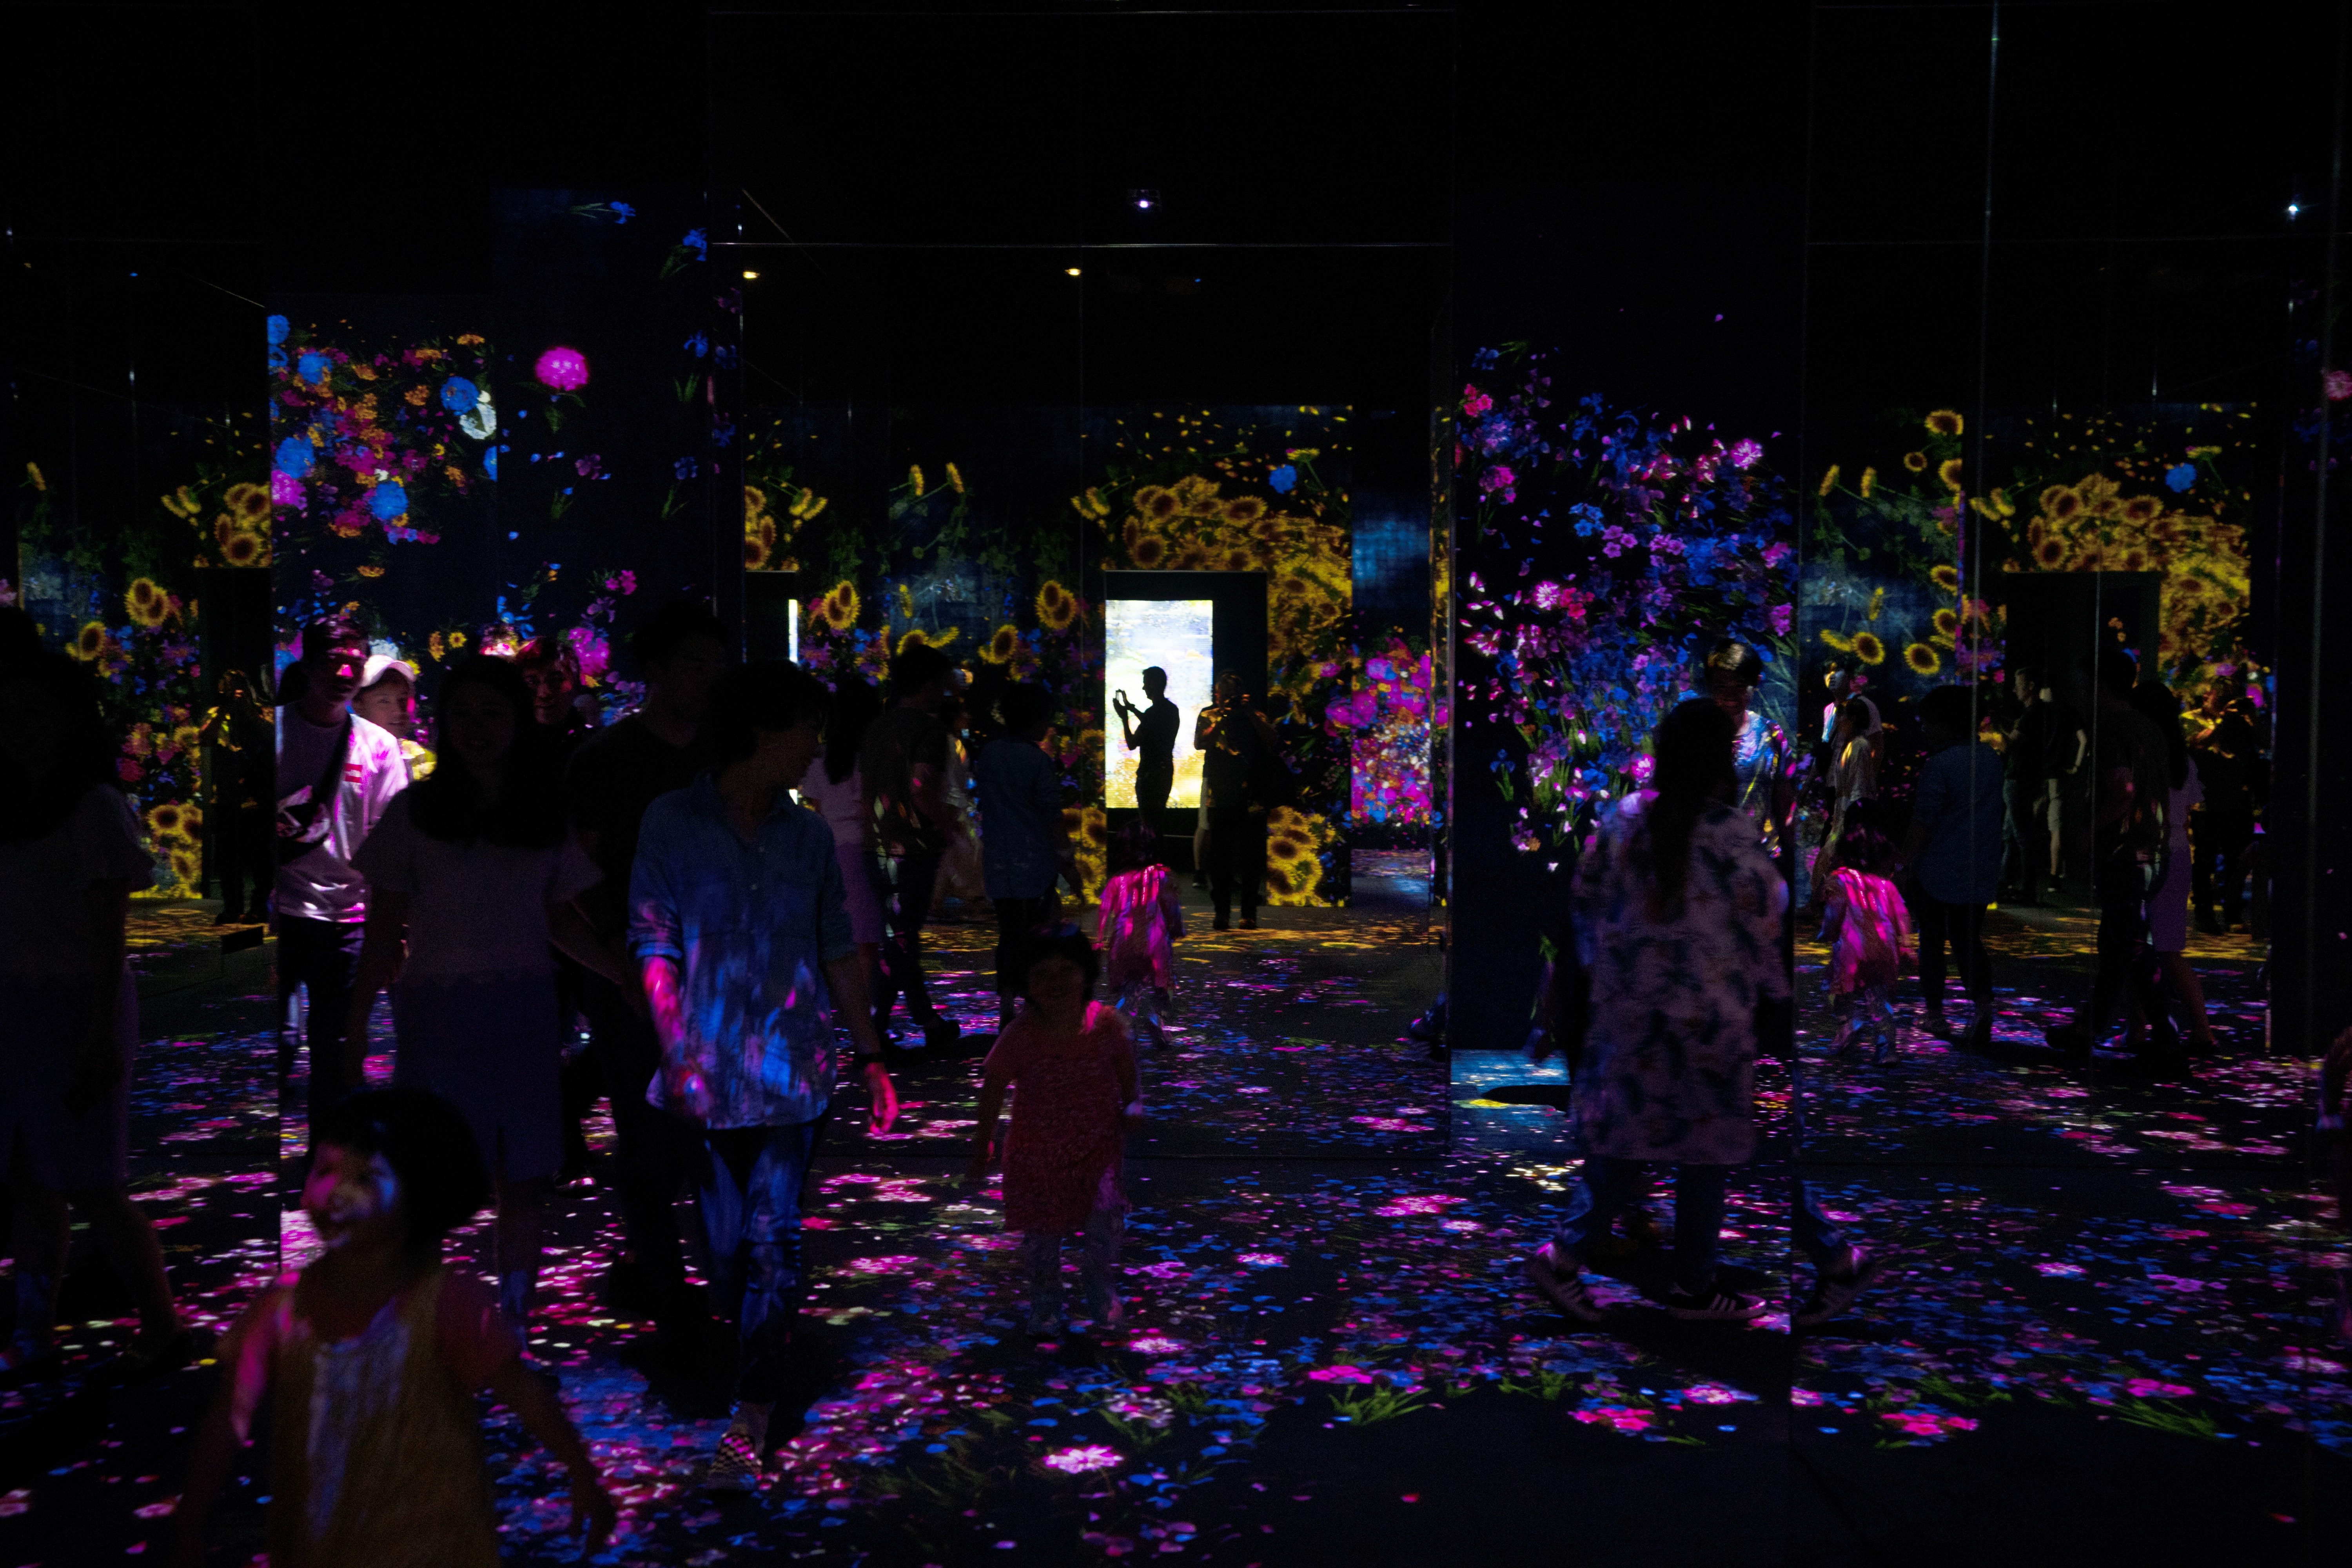 Visitors look at a digital art installation called 